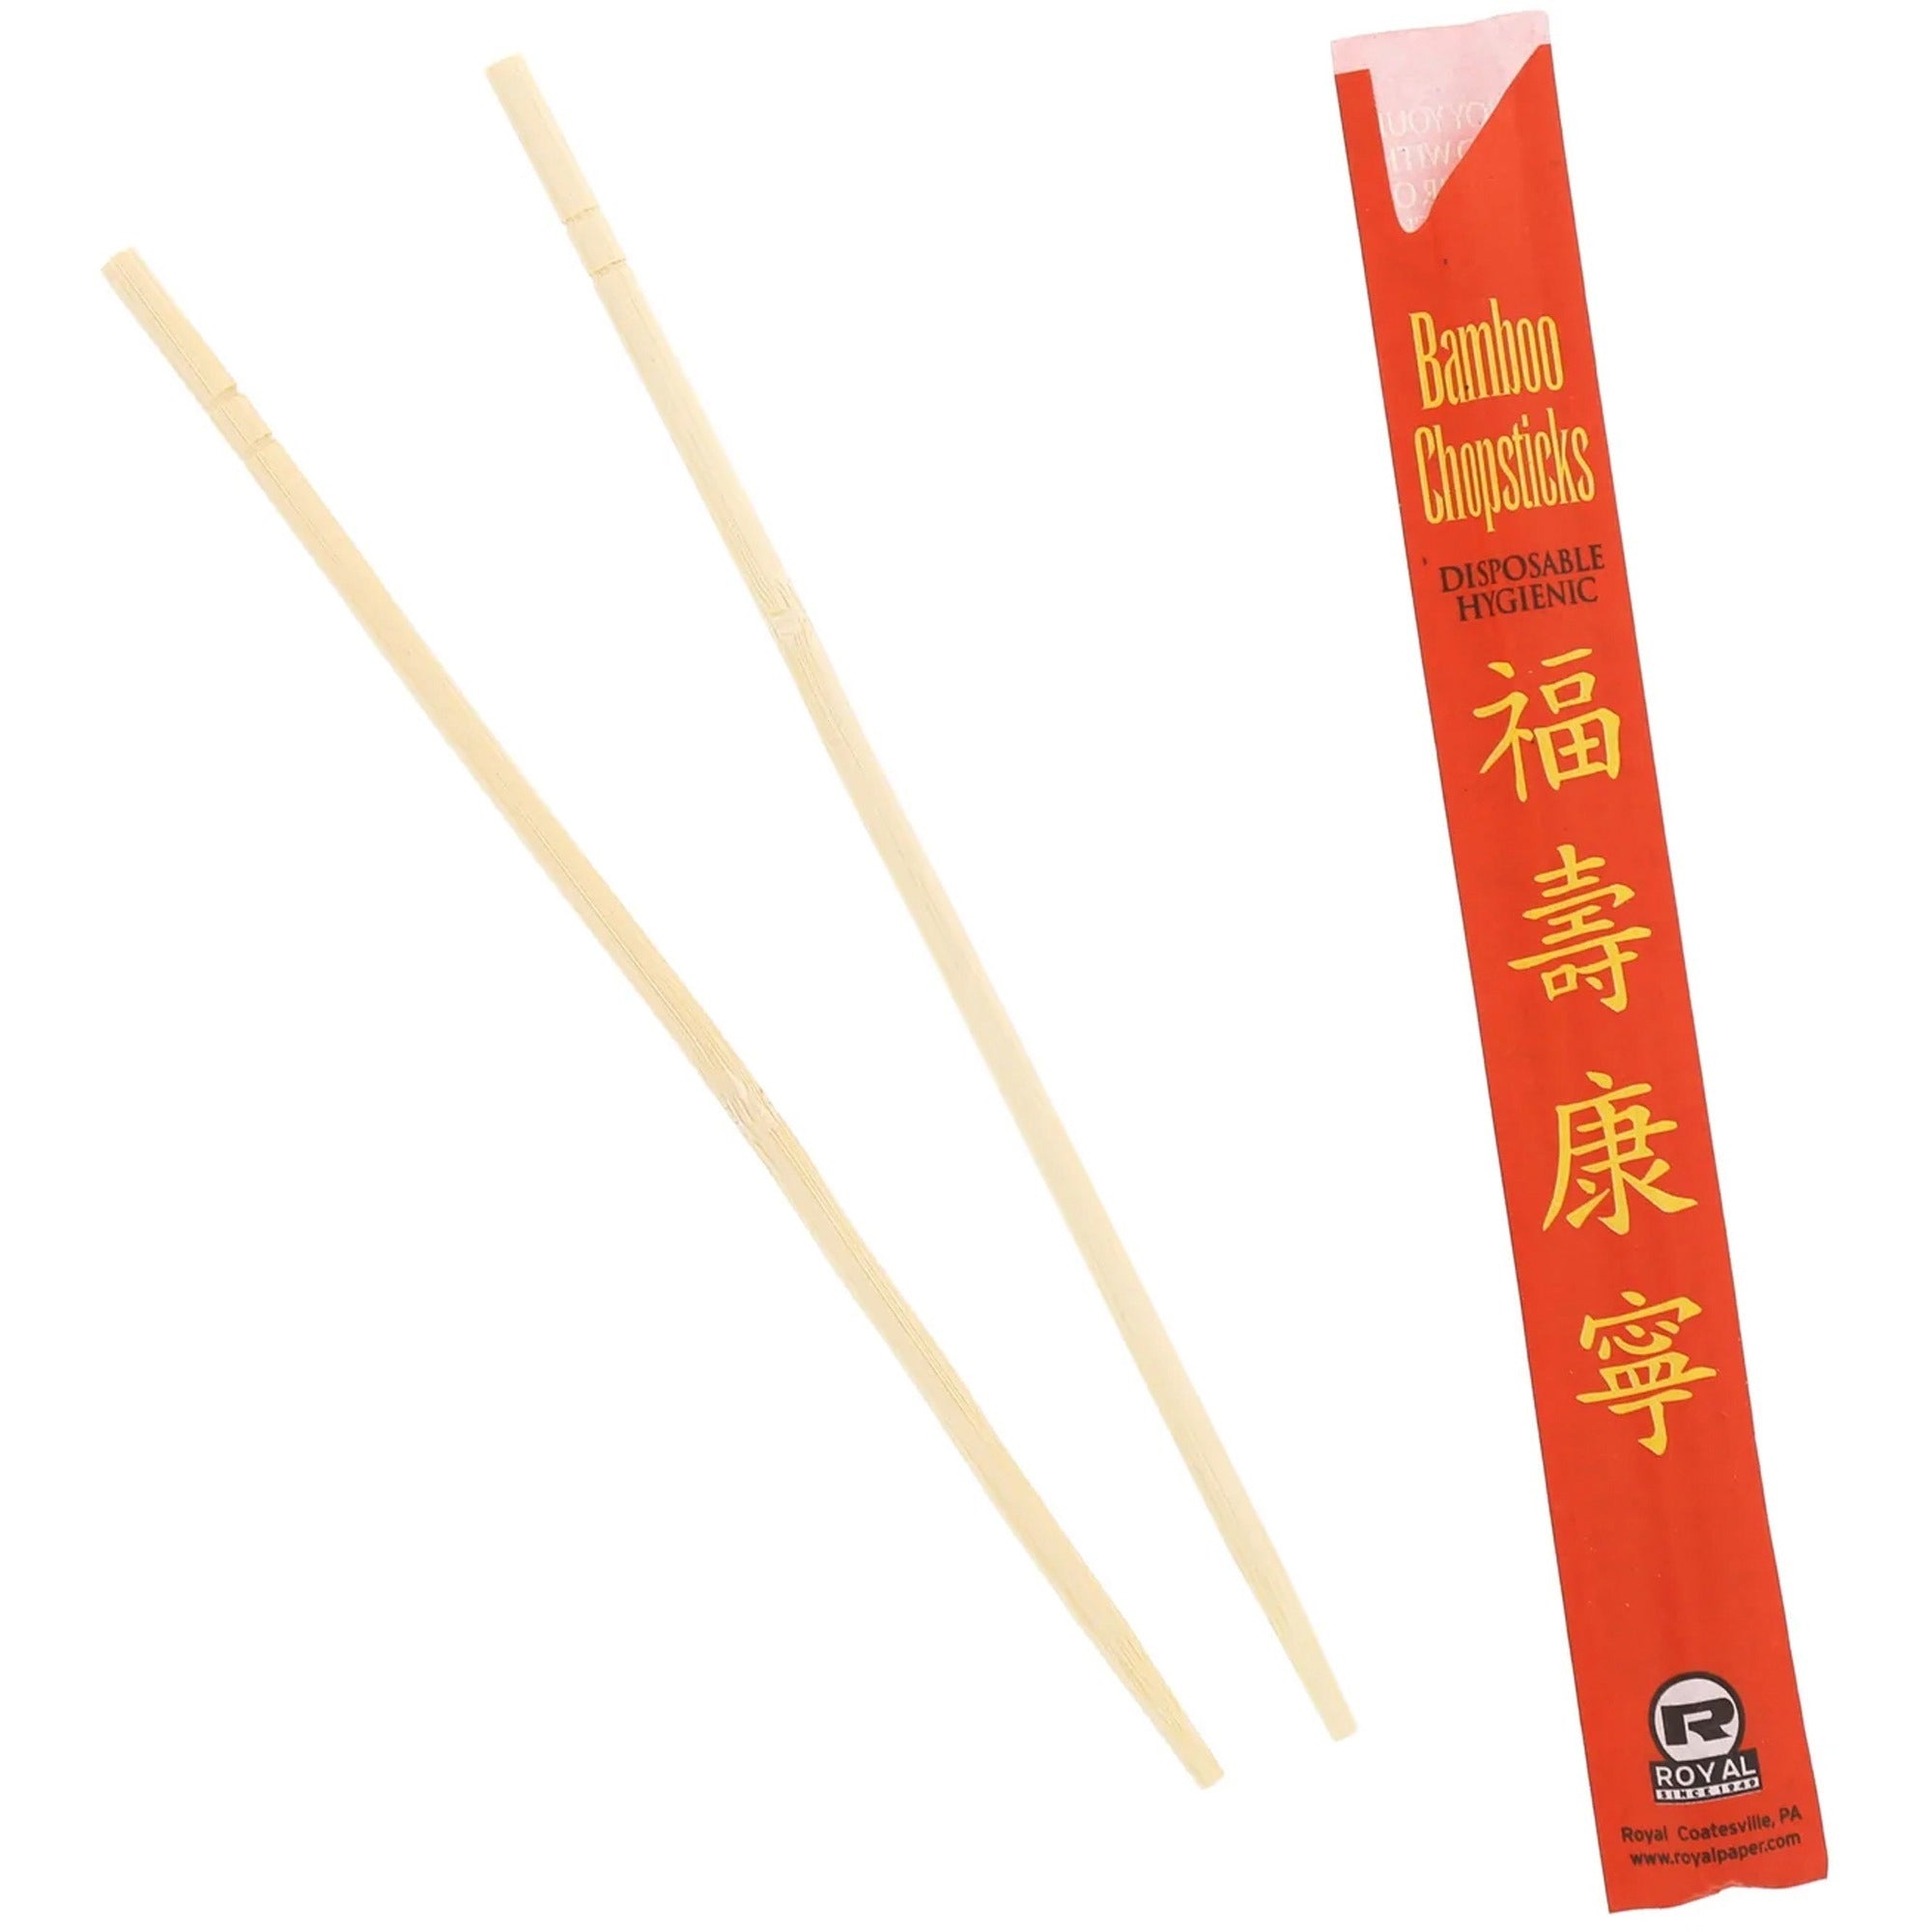 amercare-royal-9-bamboo-chopsticks-1000-carton-chopsticks-red-natural_egs054000 - 1